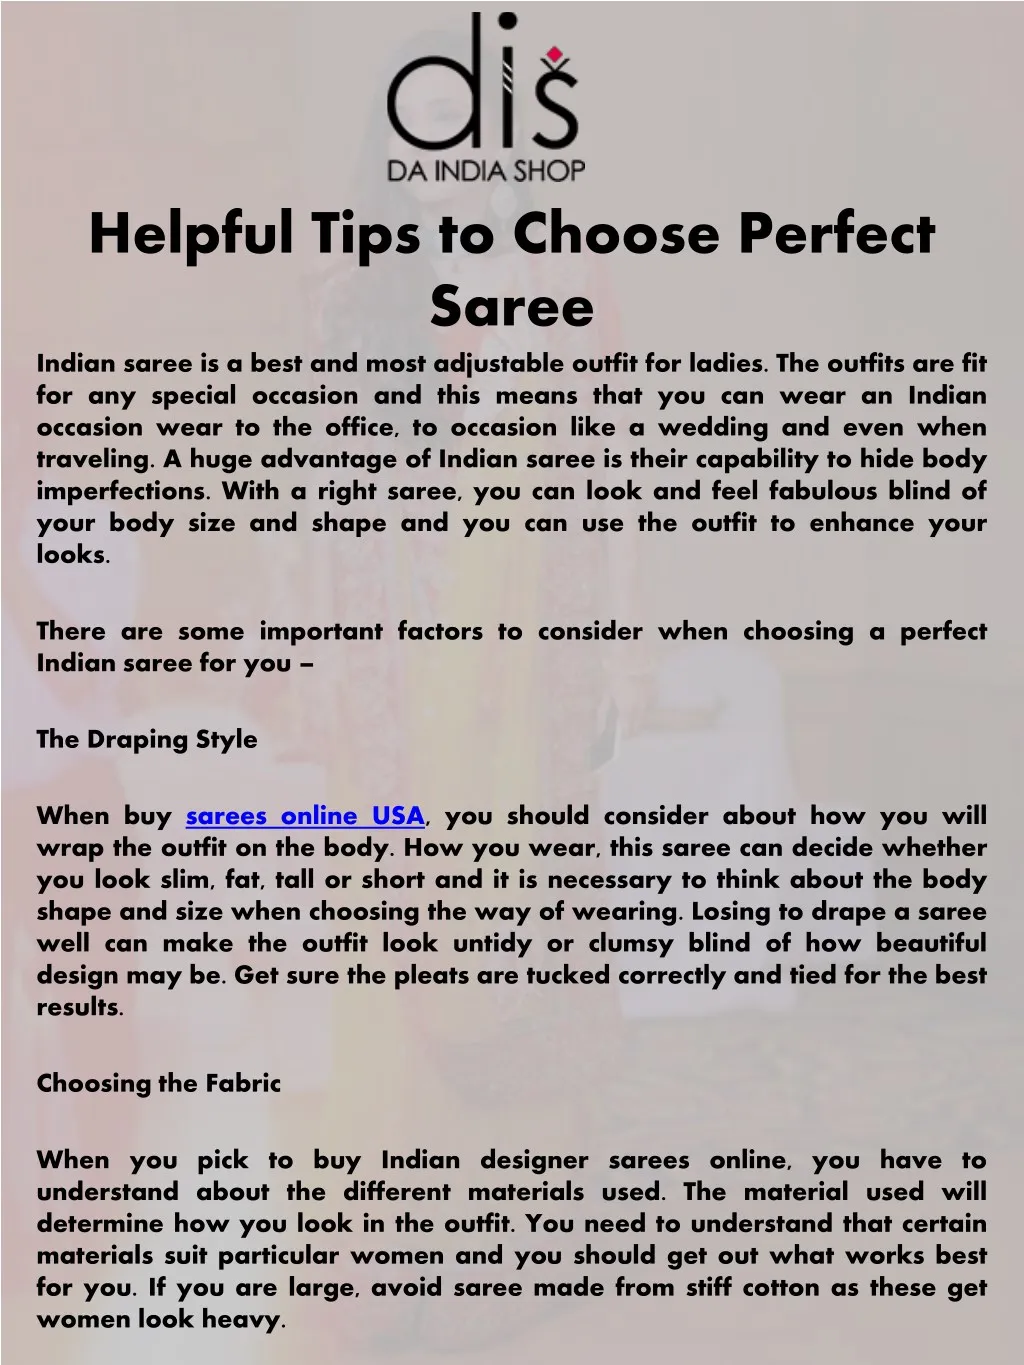 helpful tips to choose perfect saree